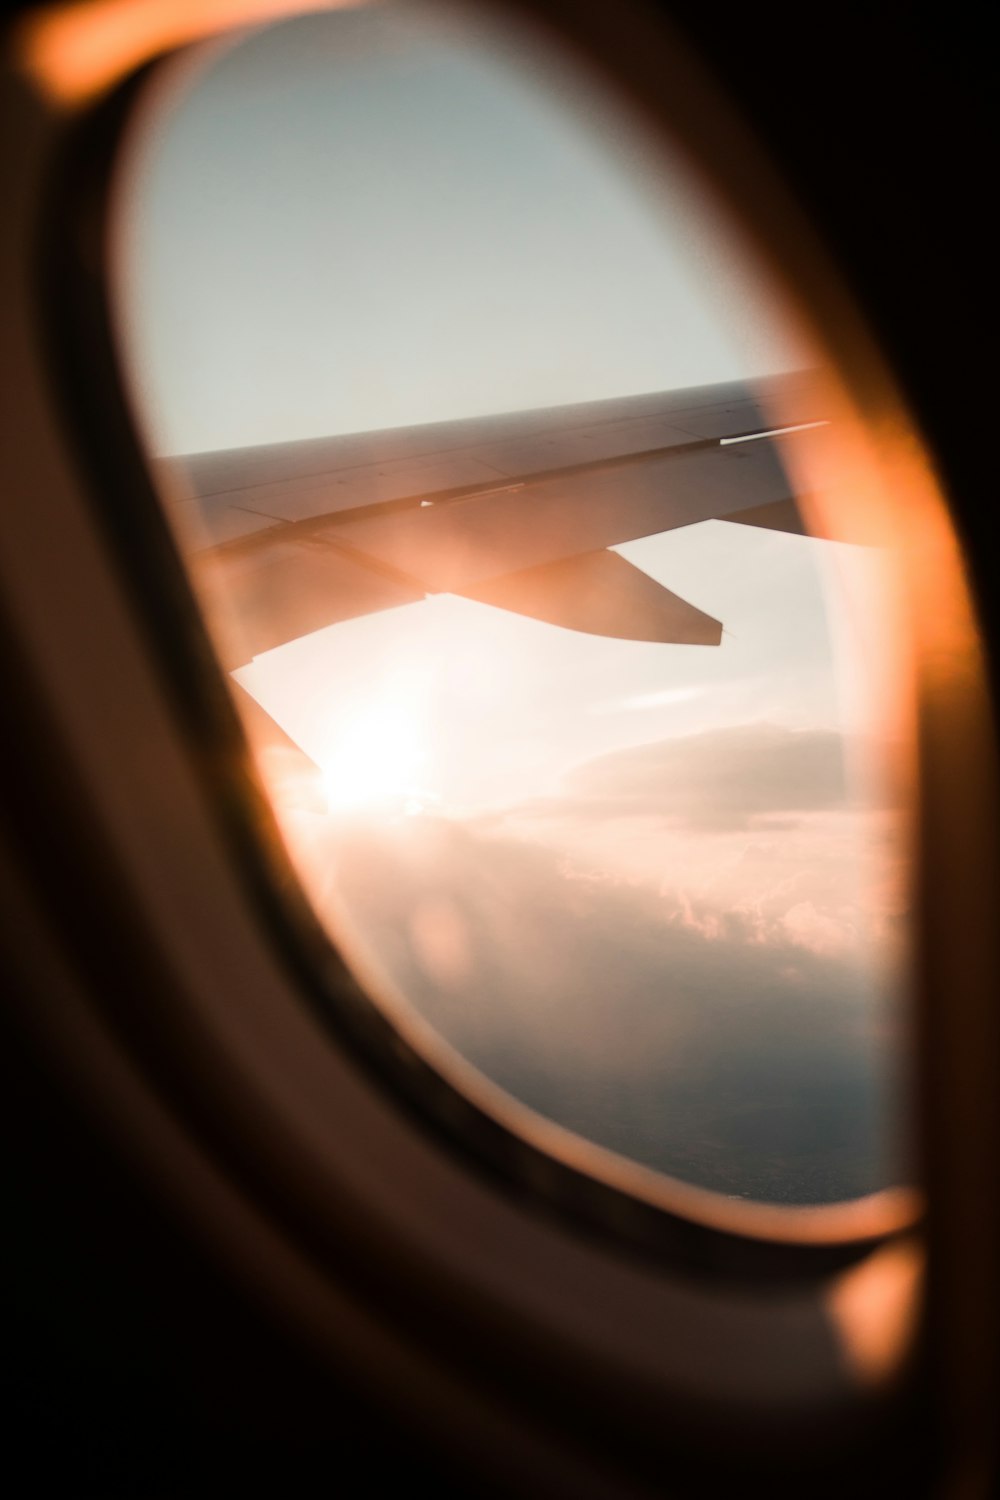 passenger plane window during daytime